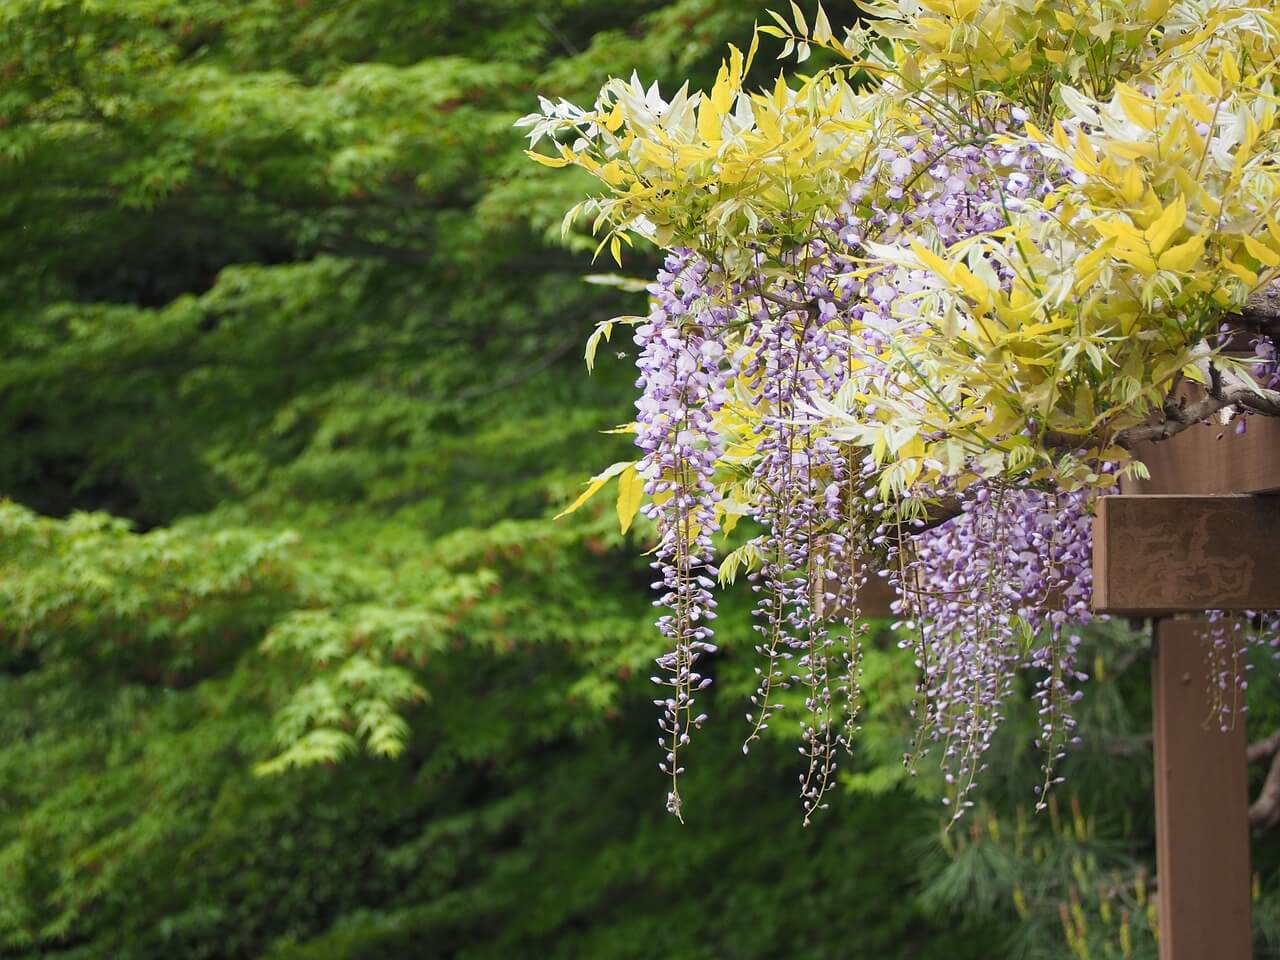 how to prune wisteria